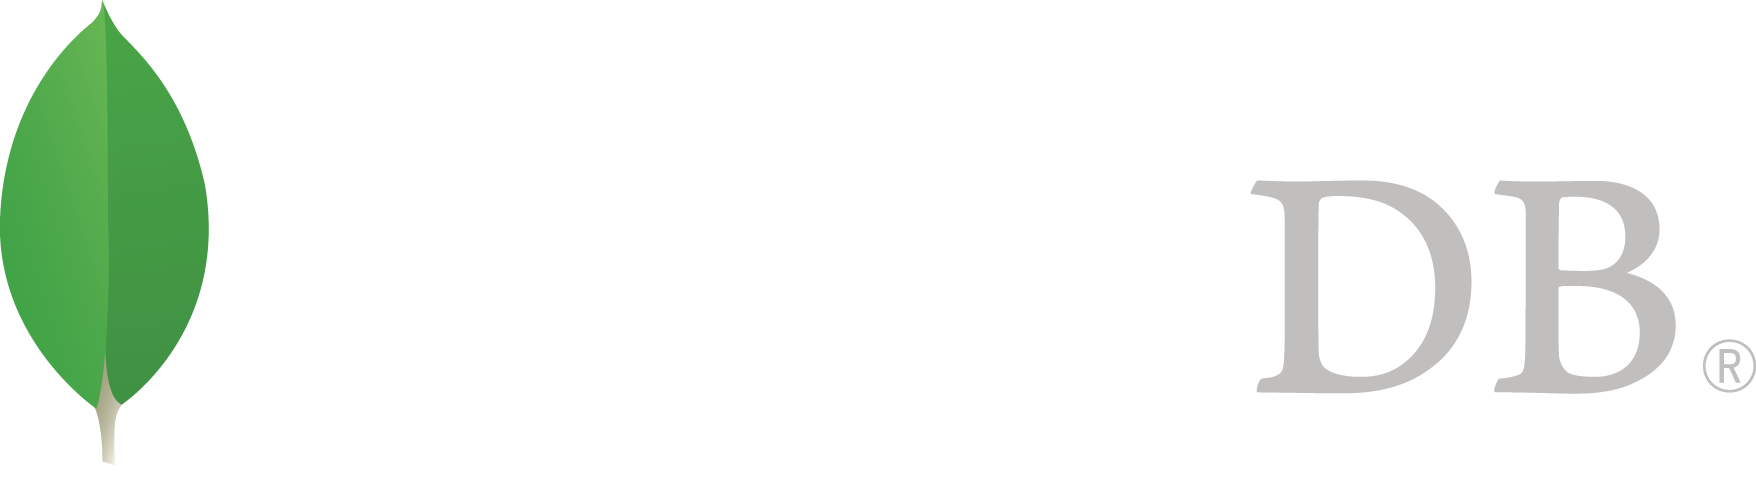 Mongo DB badge sticker